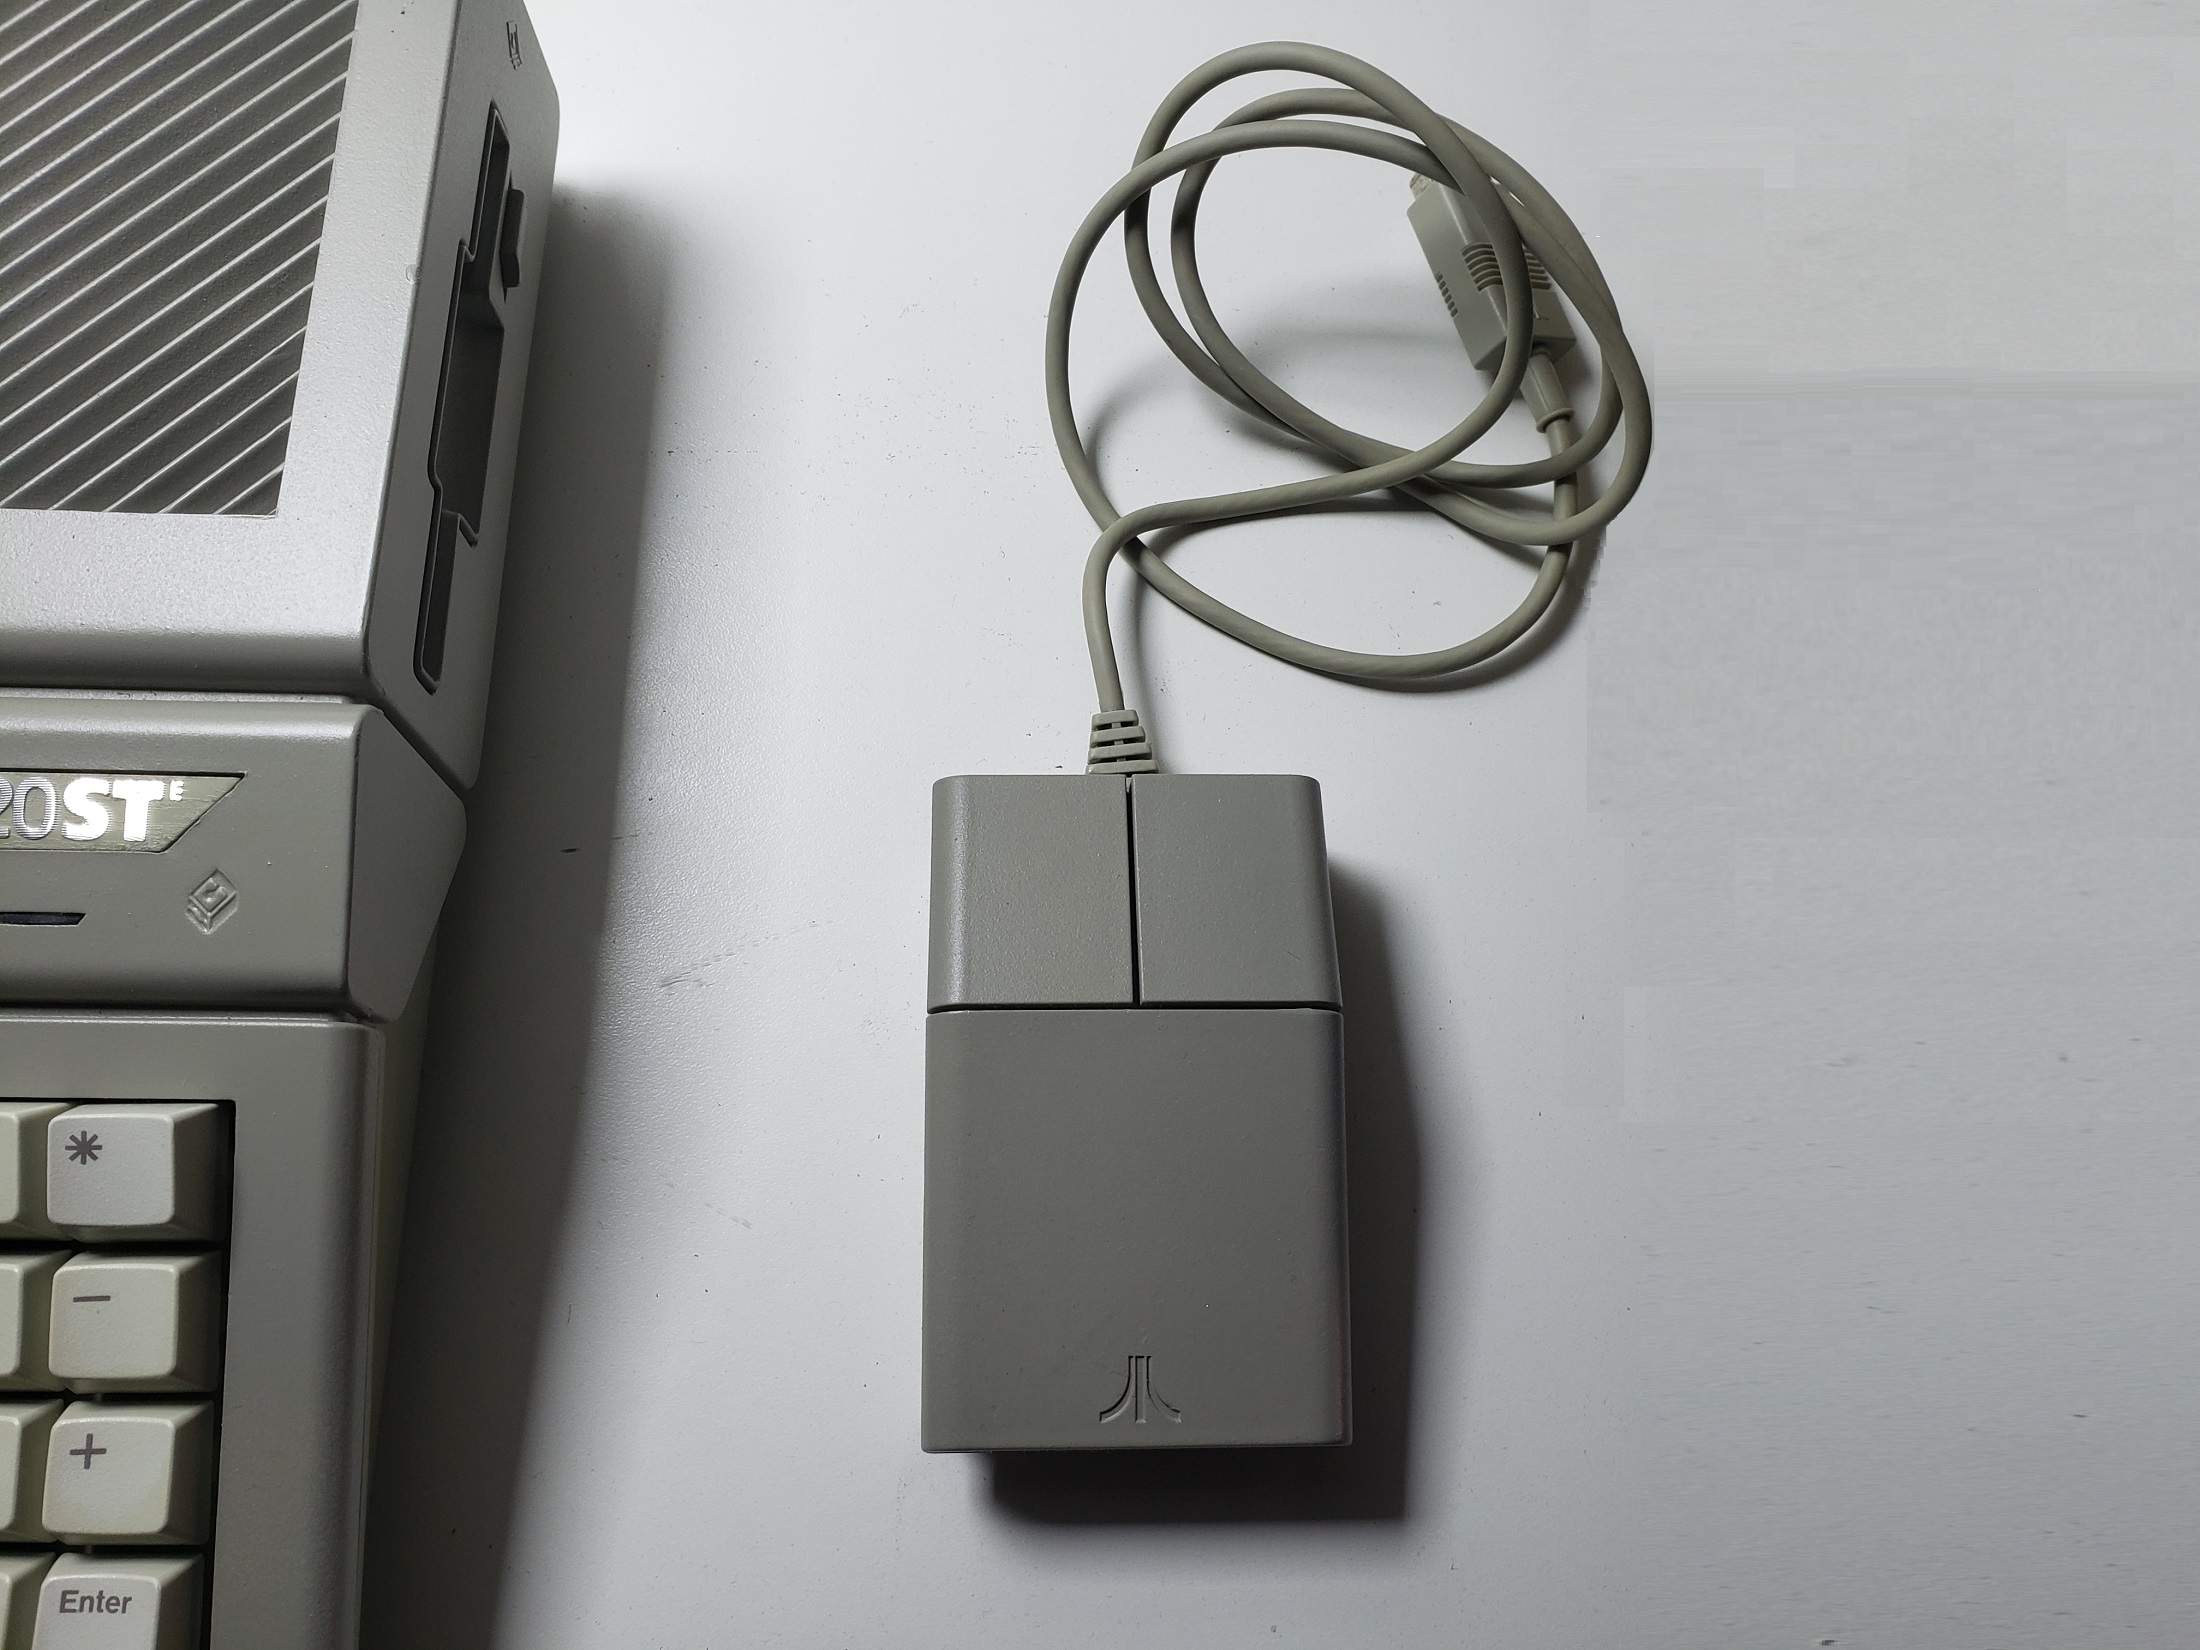 Atari STM1: Mouse